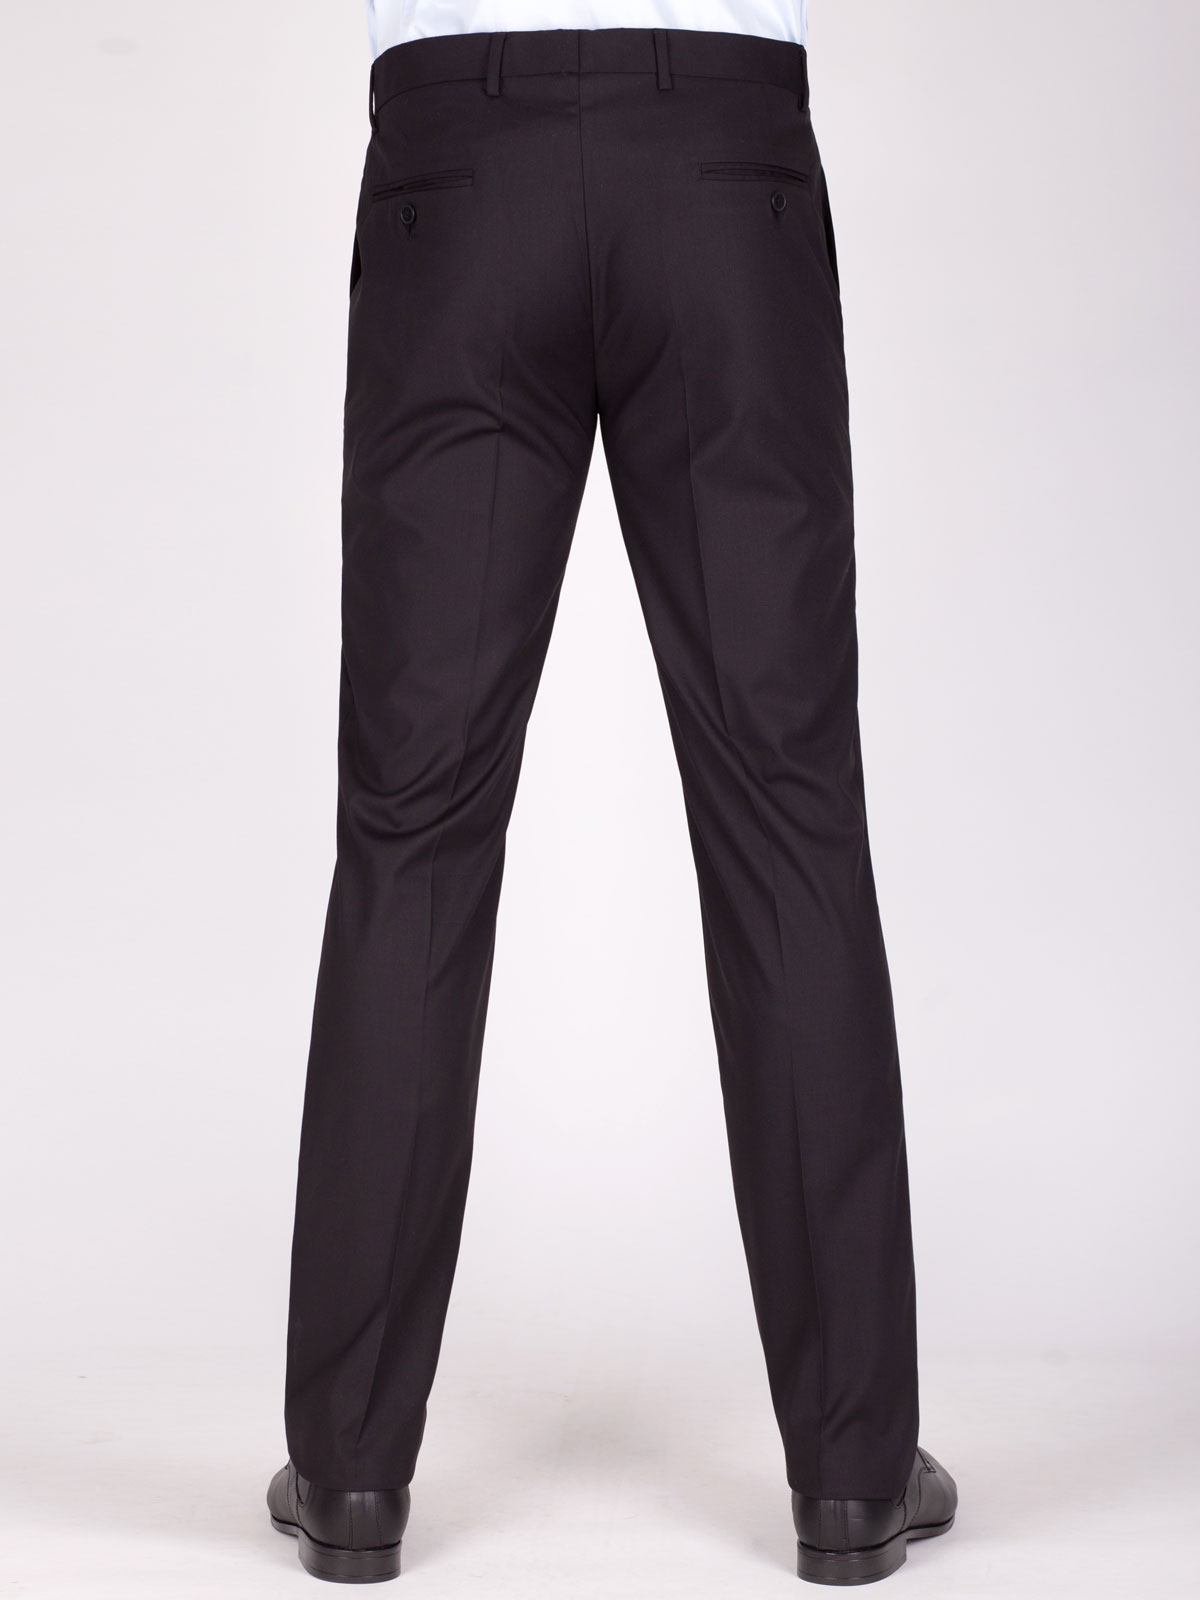 Pantaloni clasici negri eleganti - 63329 € 51.74 img3